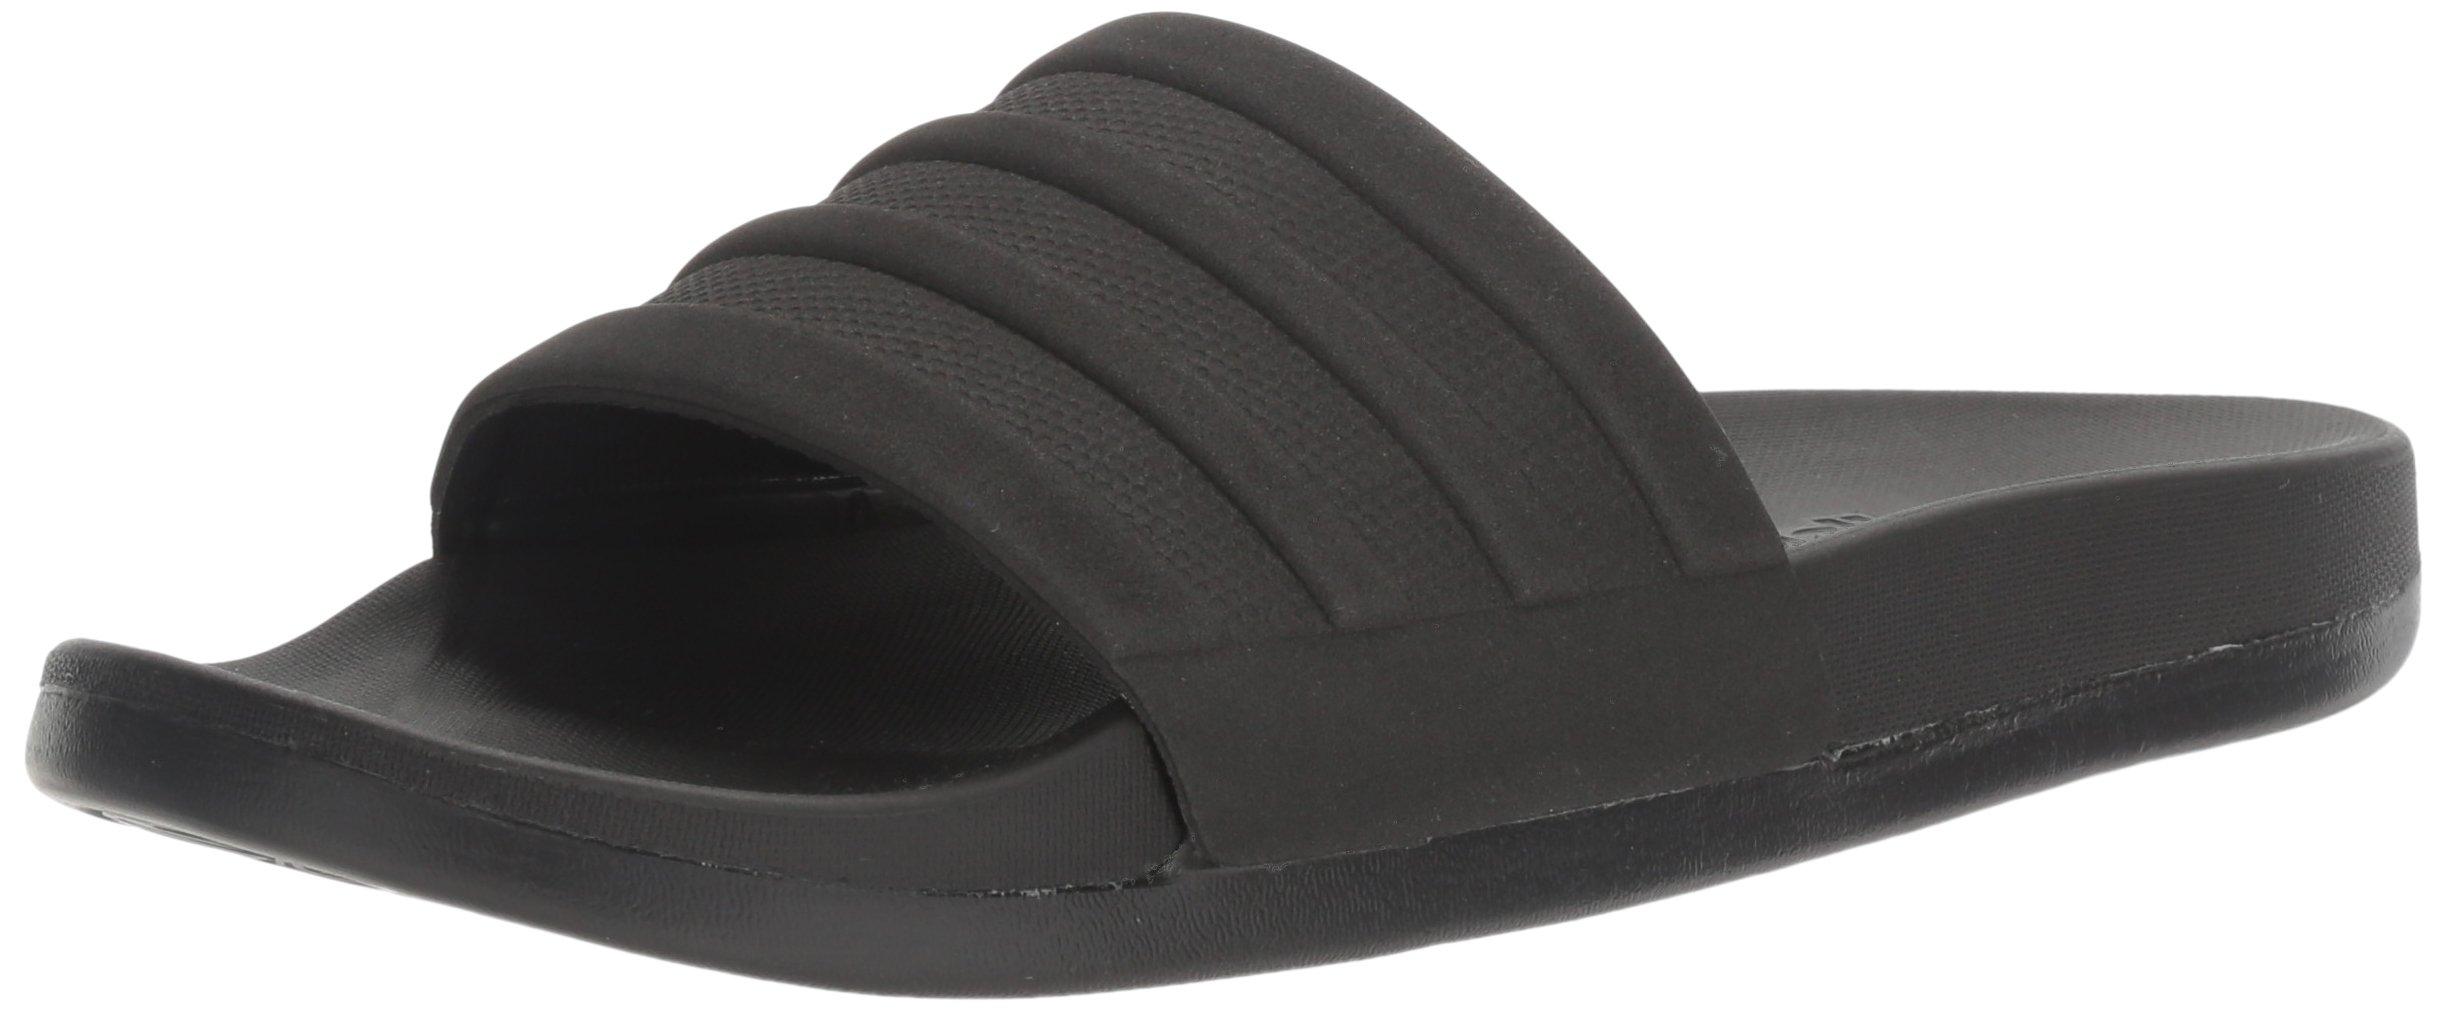 adidas Synthetic Adilette Comfort Slide Sandals in Black/Black (Black) for  Men - Save 60% | Lyst